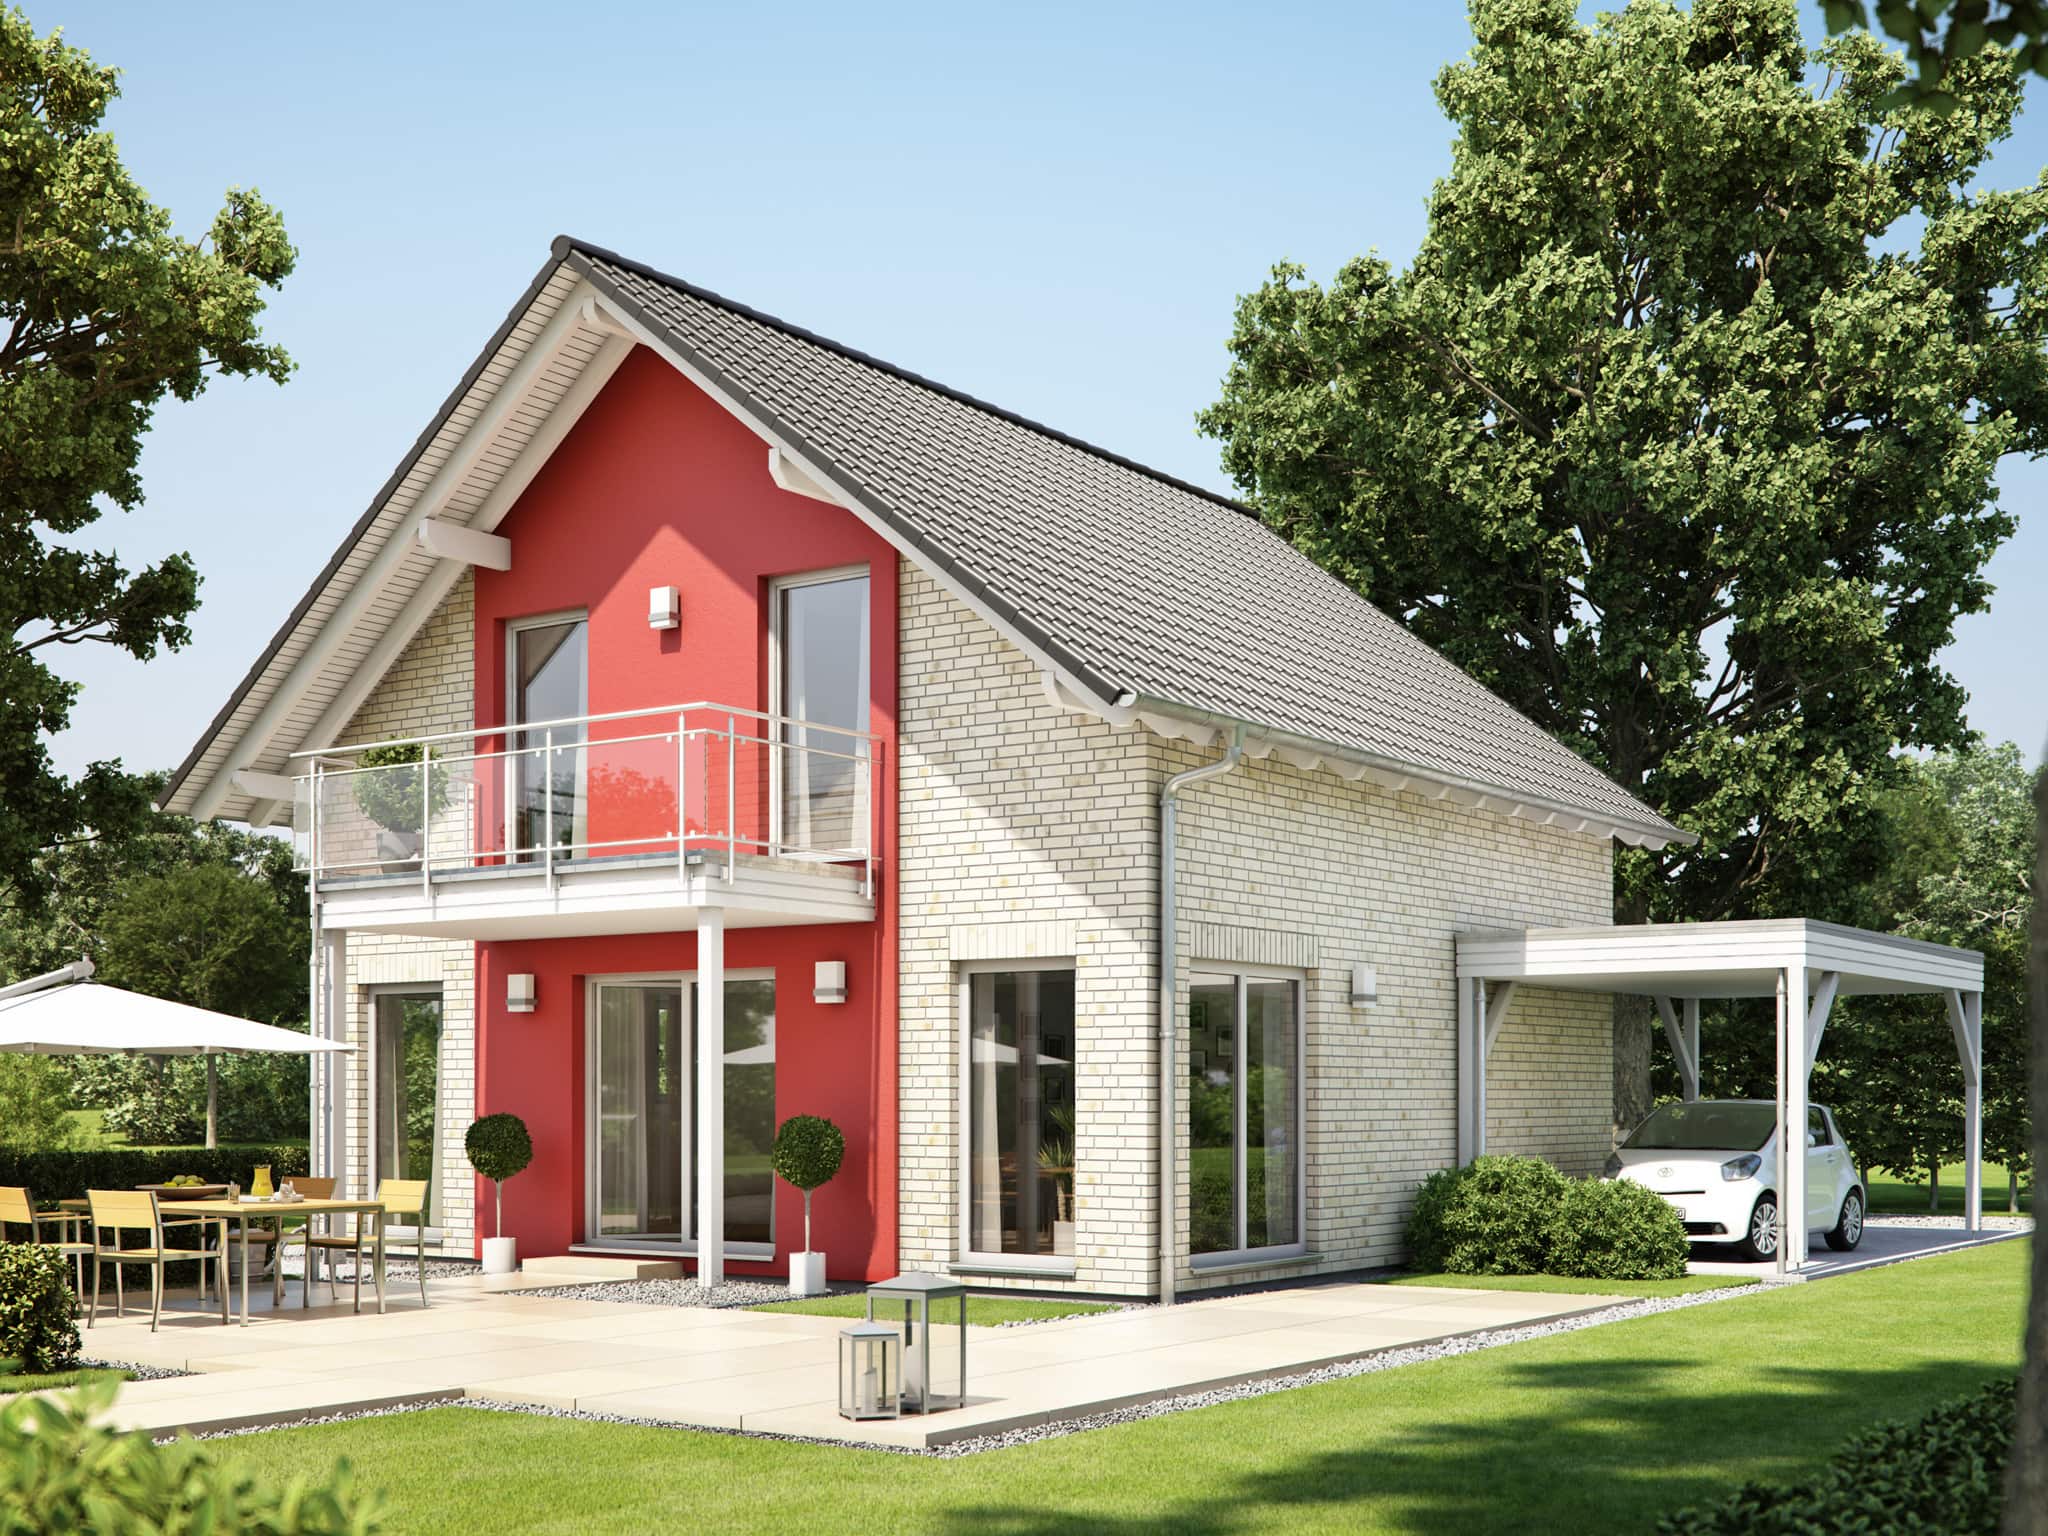 Einfamilienhaus mit Klinker Fassade & Satteldach, 5 Zimmer, 125 qm - Fertighaus Living Haus SUNSHINE 126 V3 - HausbauDirekt.de